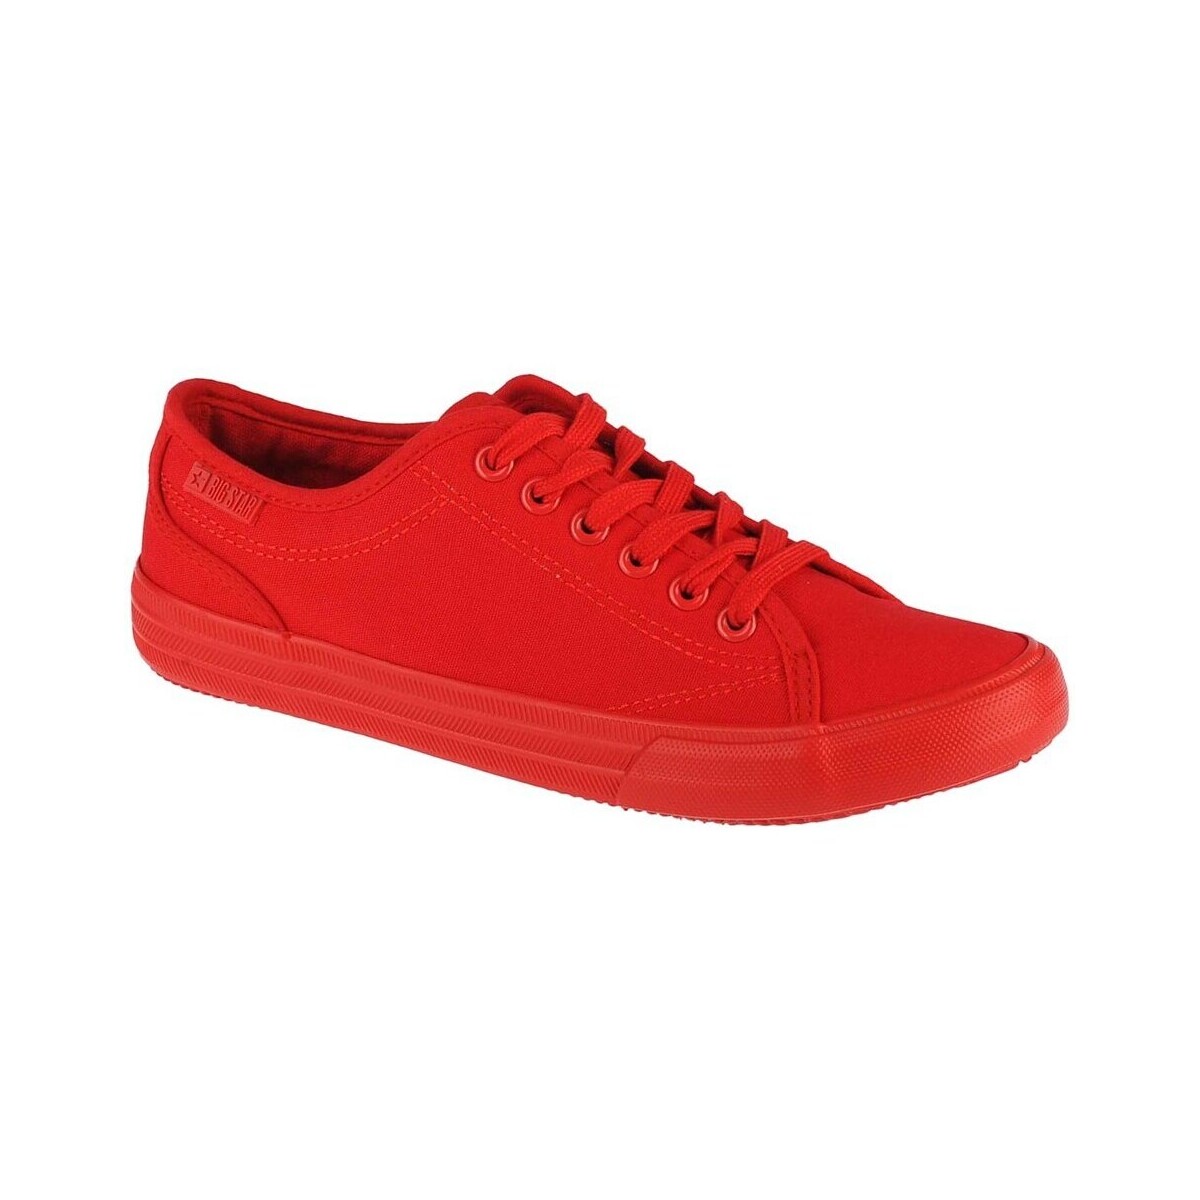 Cipők Női Rövid szárú edzőcipők Big Star JJ274068 Piros